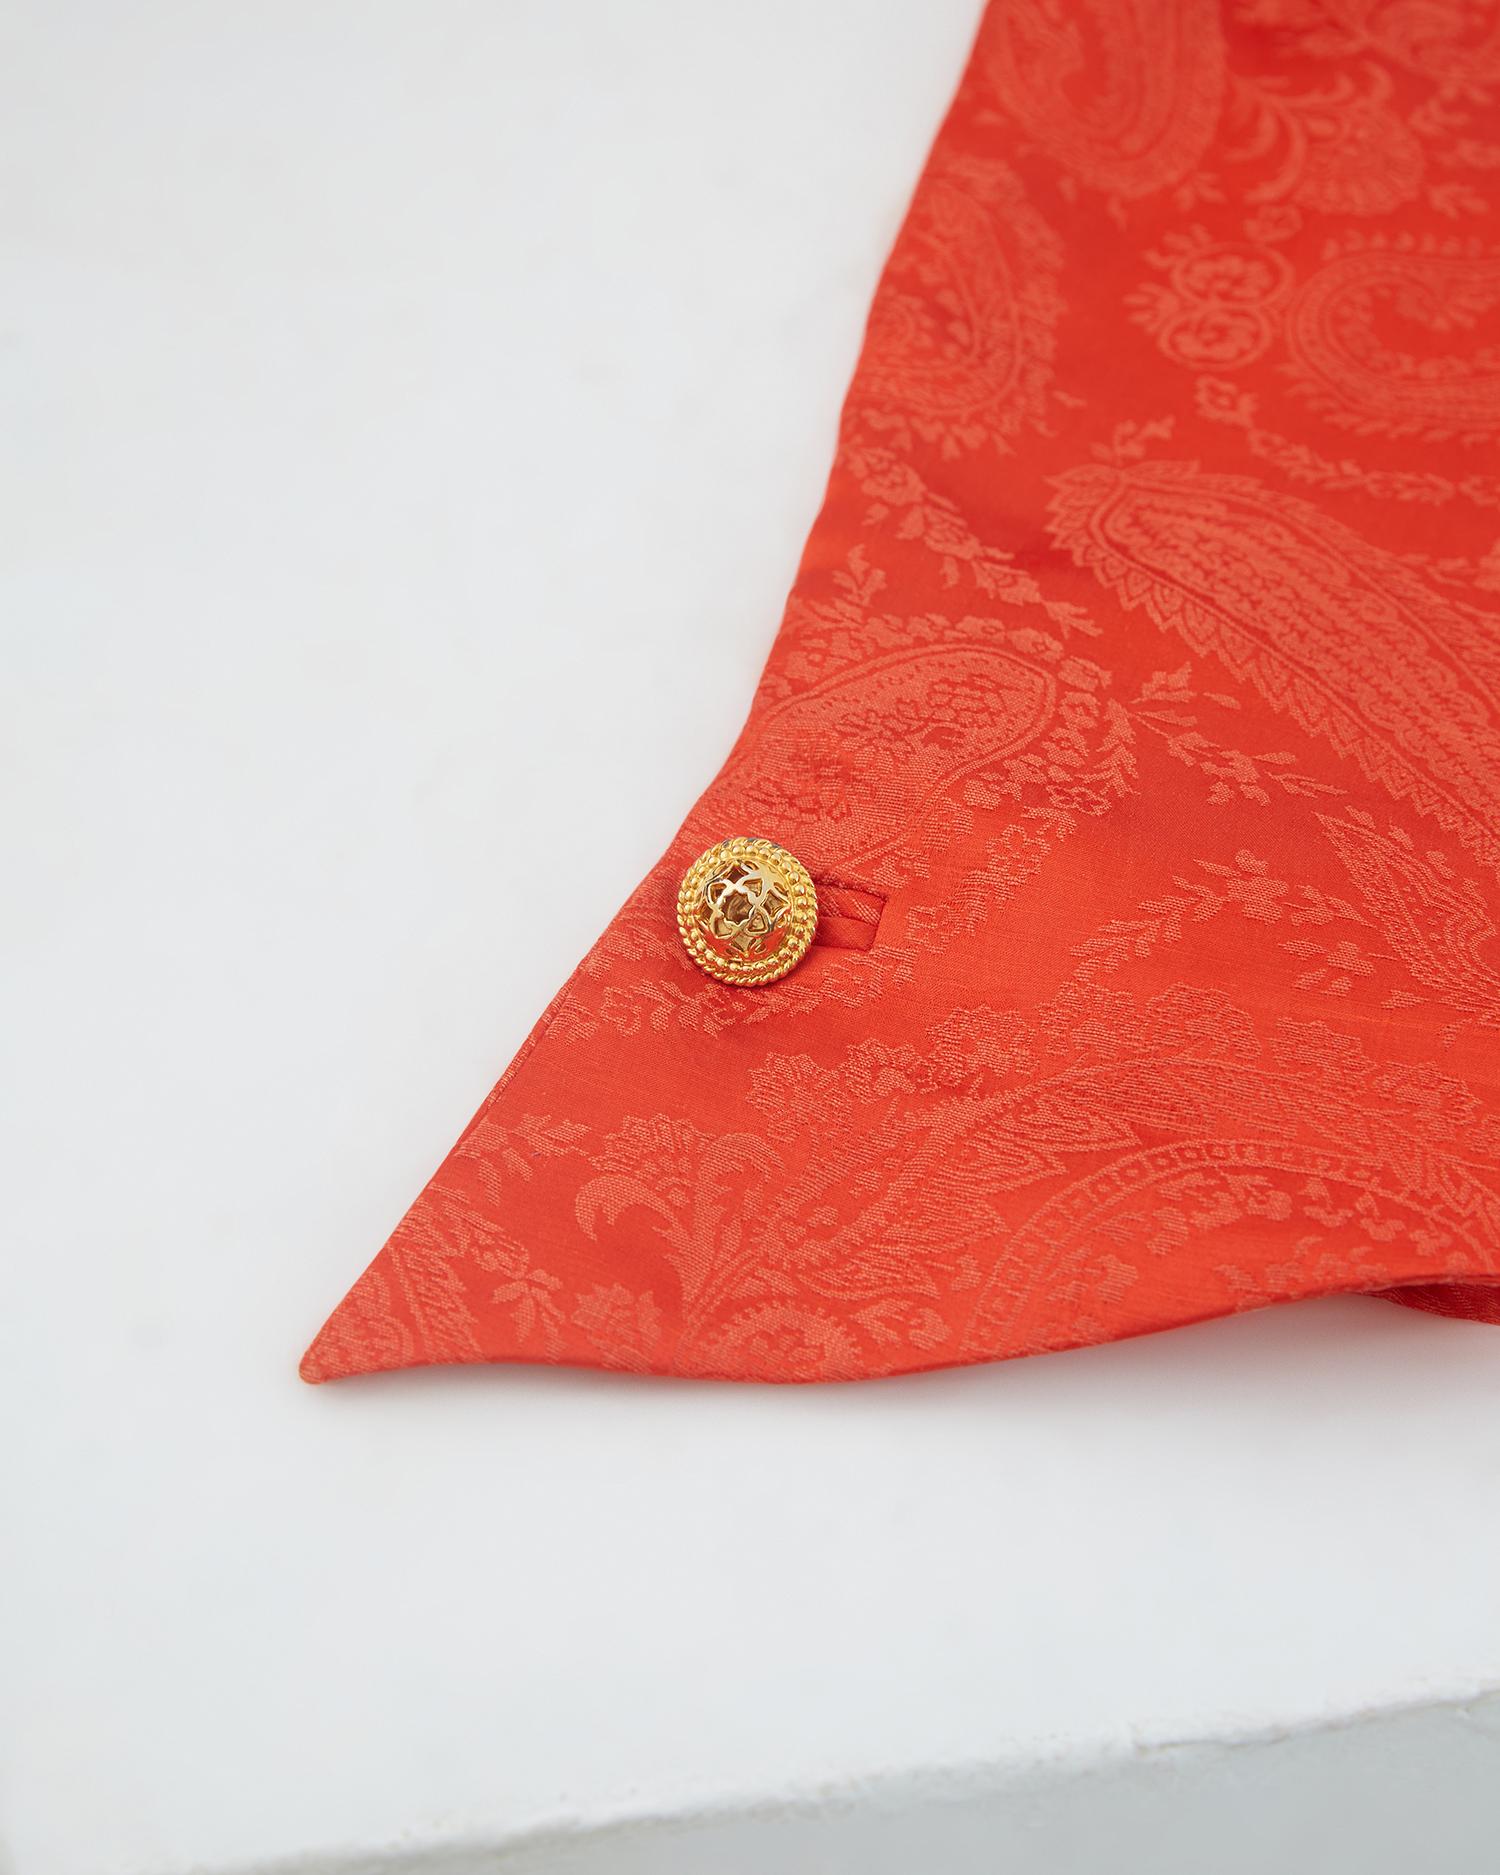 Gianni Versace S/S 1991 Orange silk paisley print blazer and skirt set For Sale 6